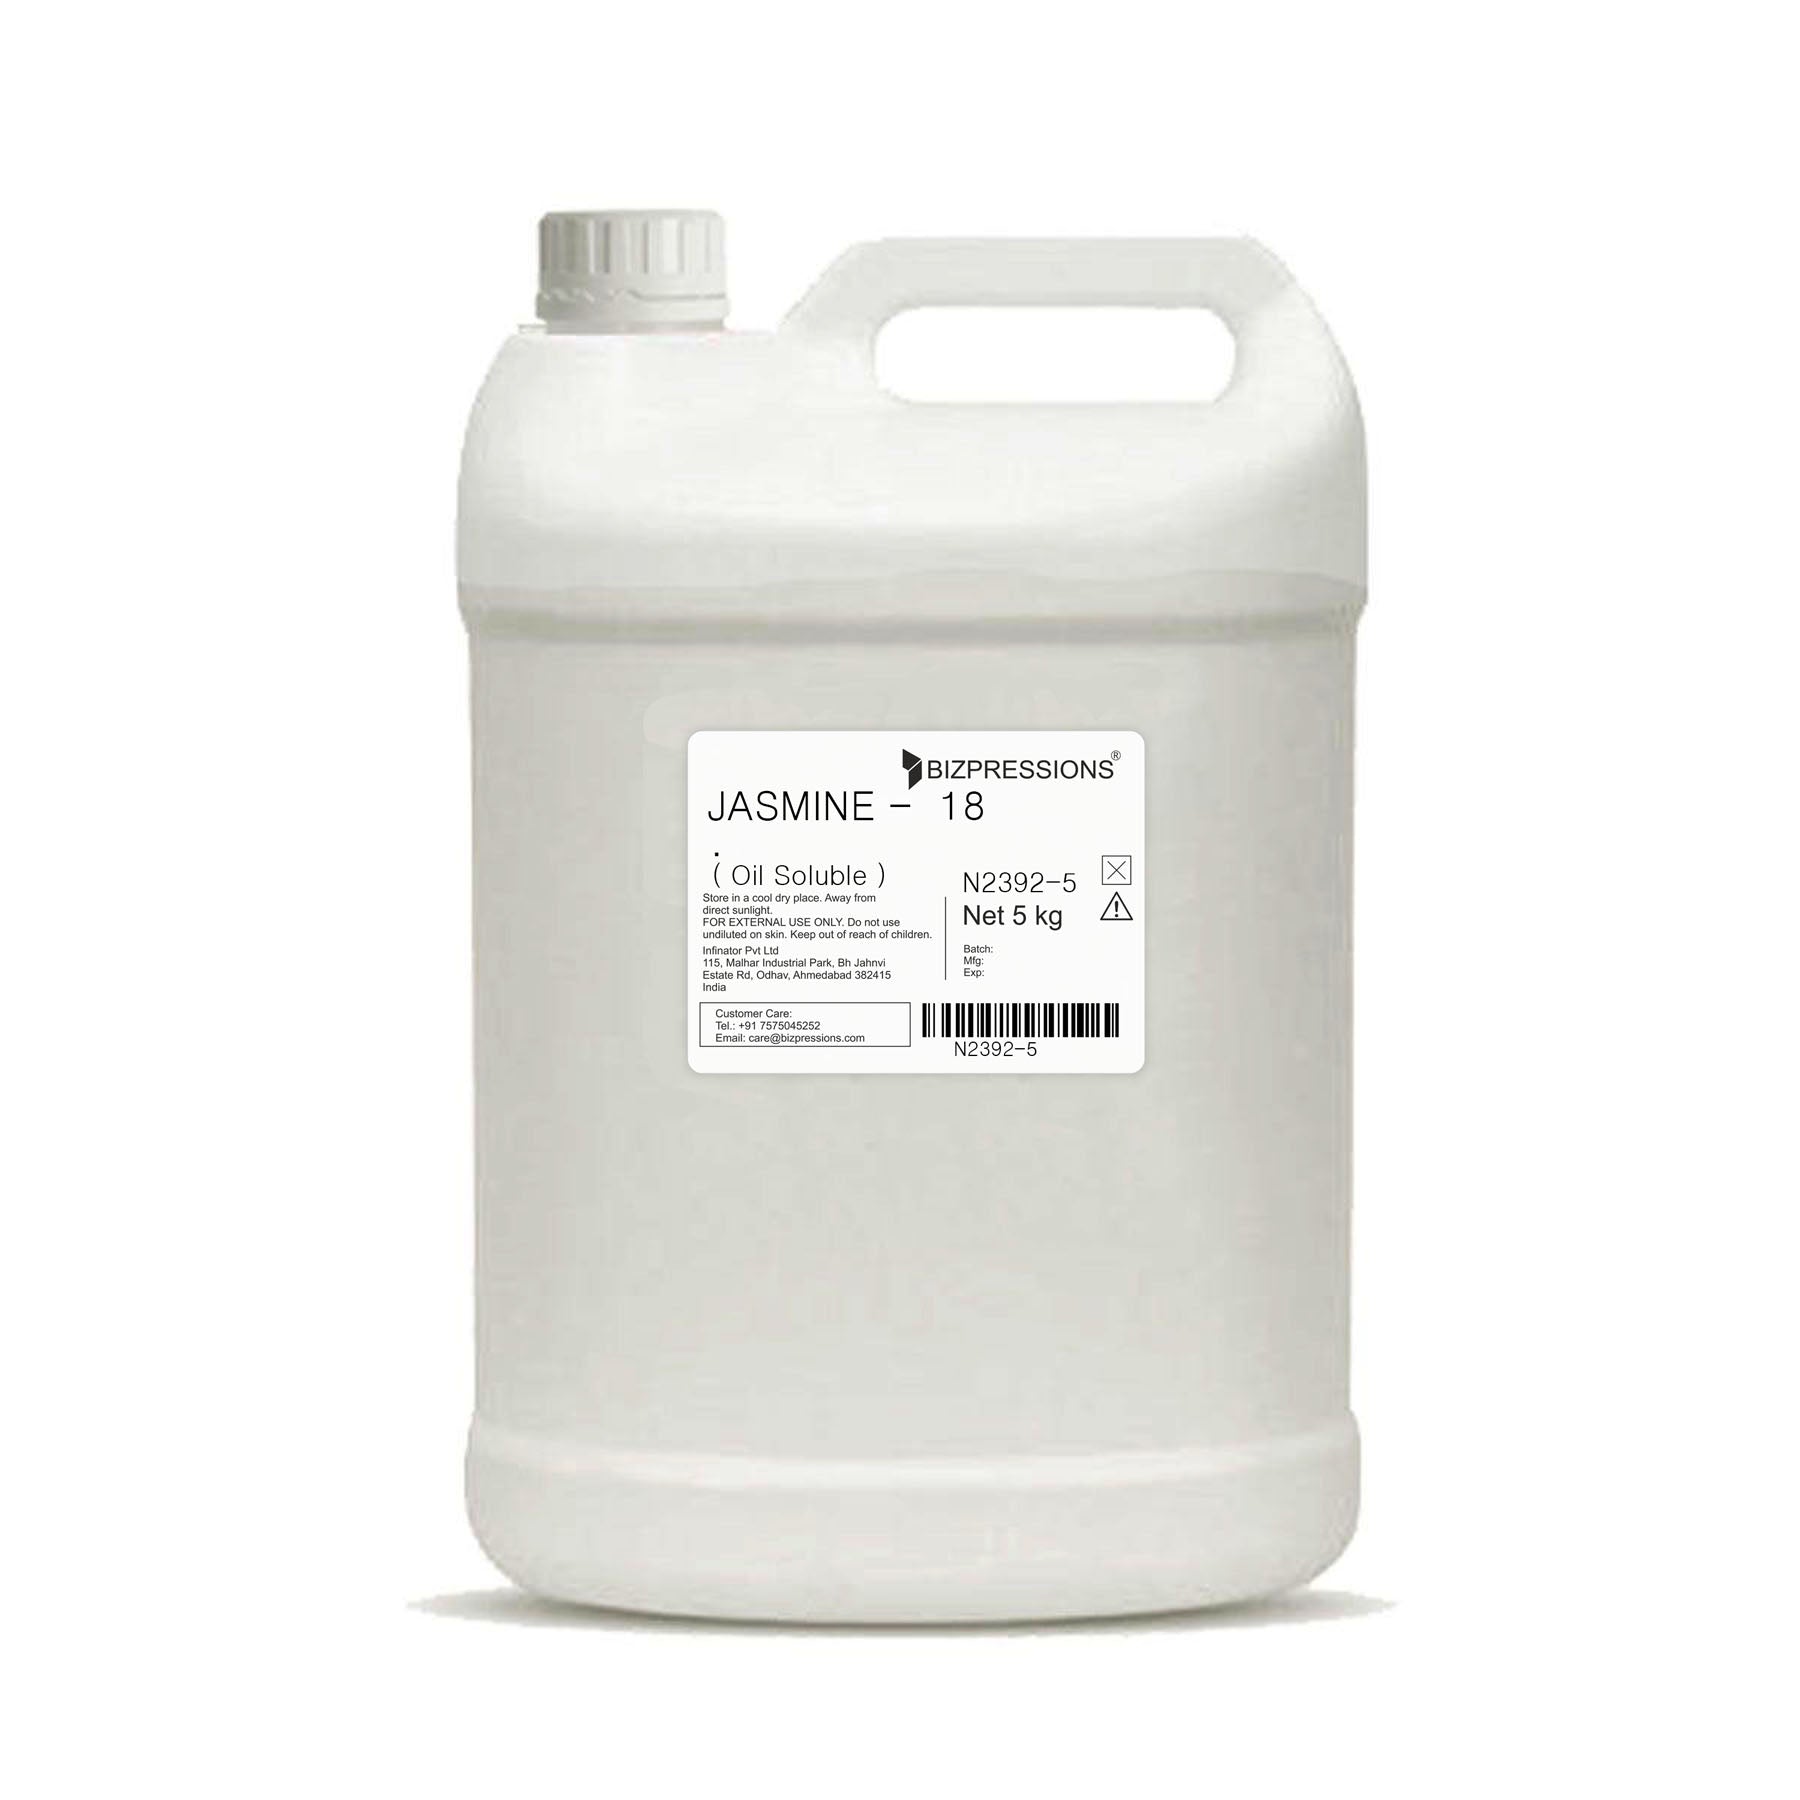 JASMINE - 18 - Fragrance ( Oil Soluble ) - 5 kg